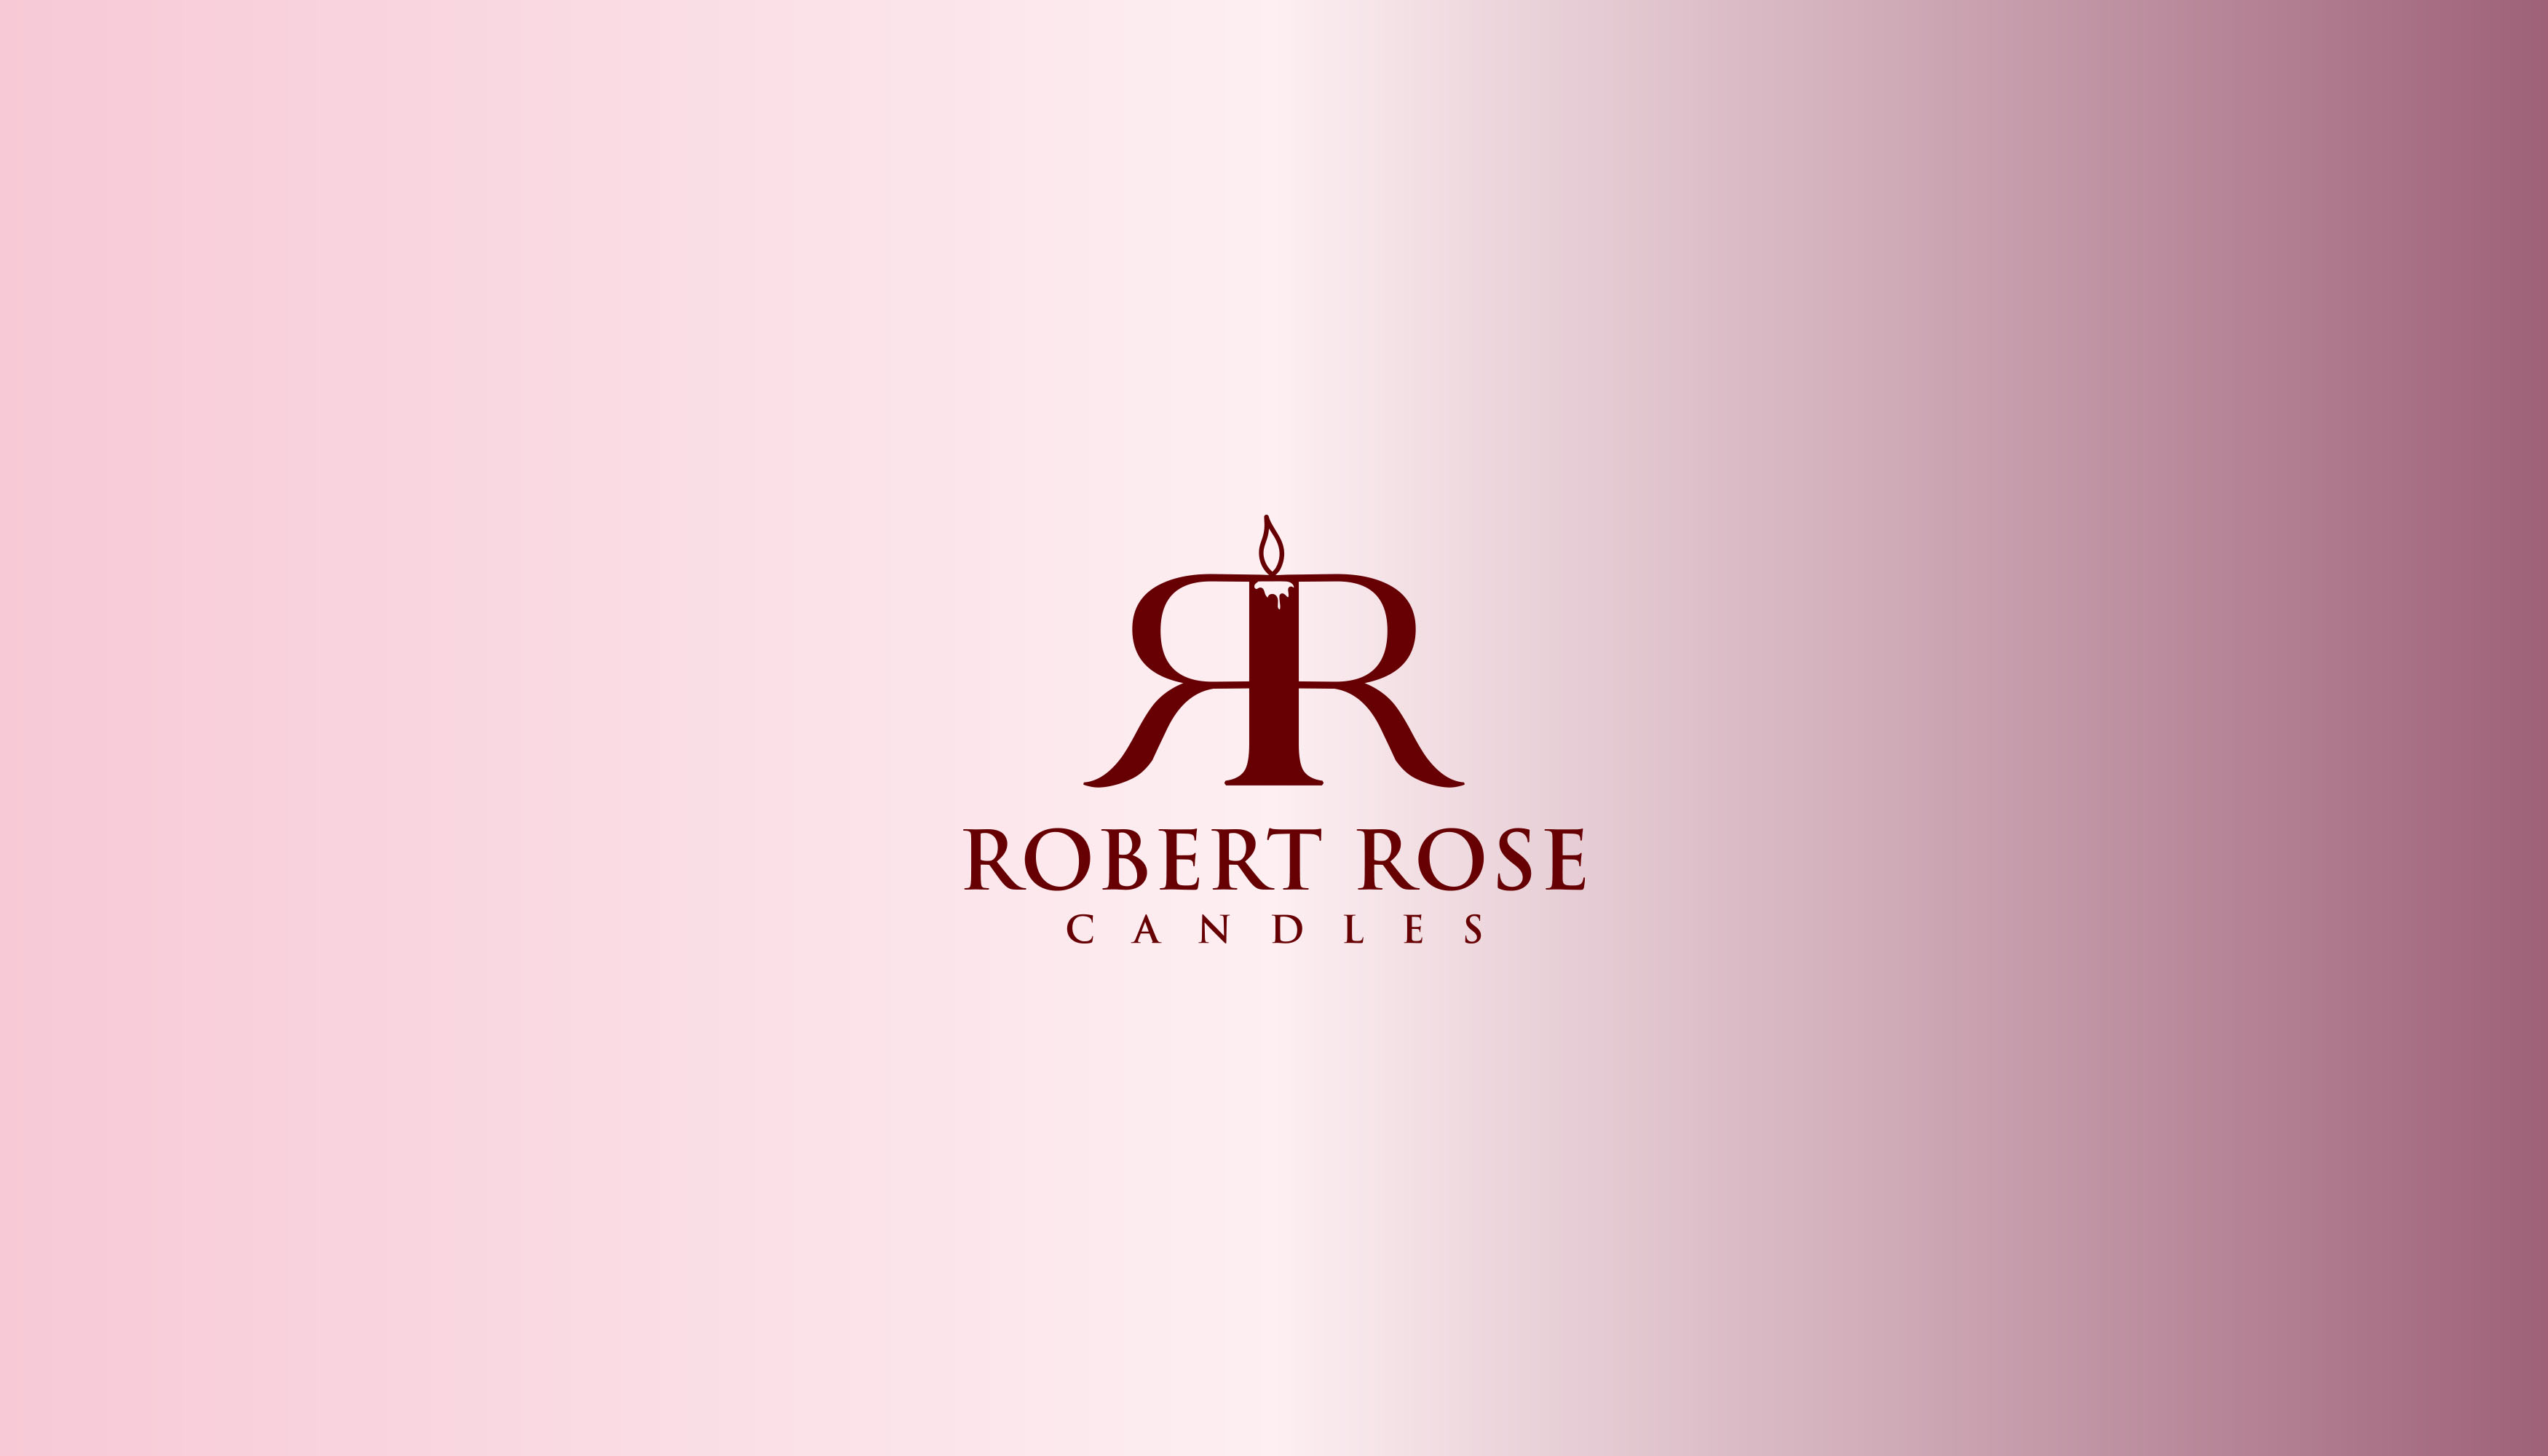 Robert Rose Candles Design #5